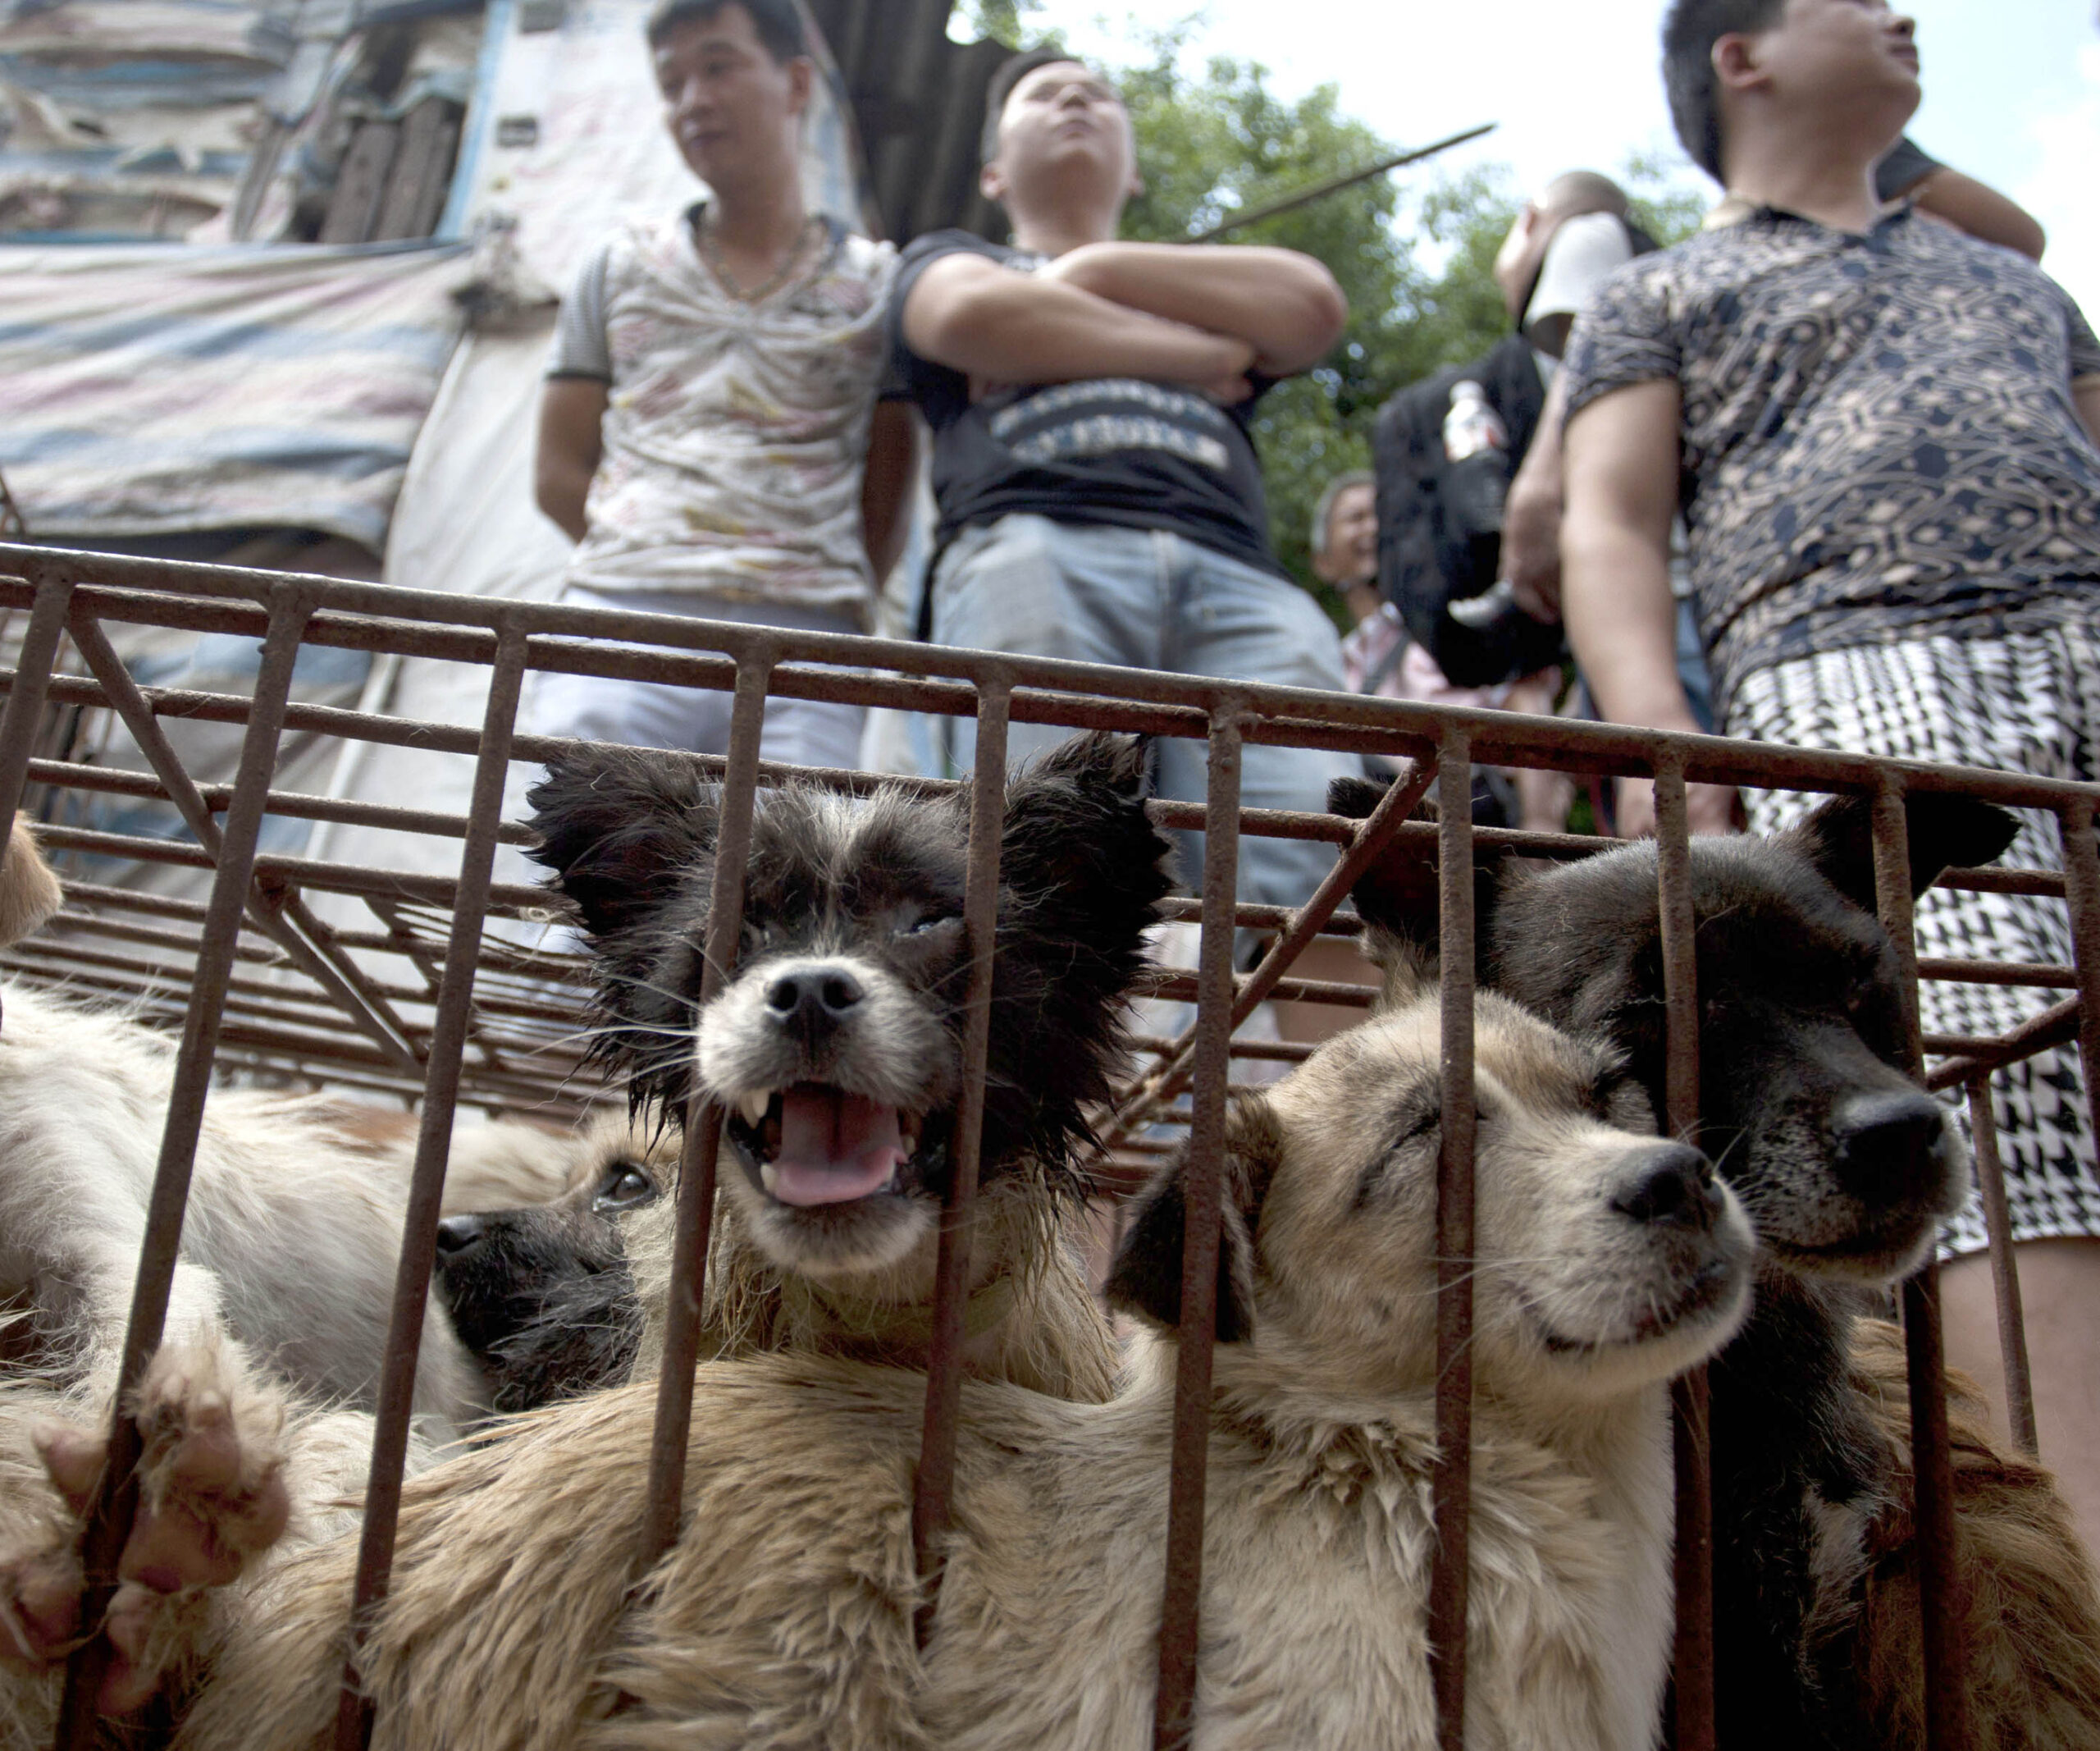 yulin dog meat festival